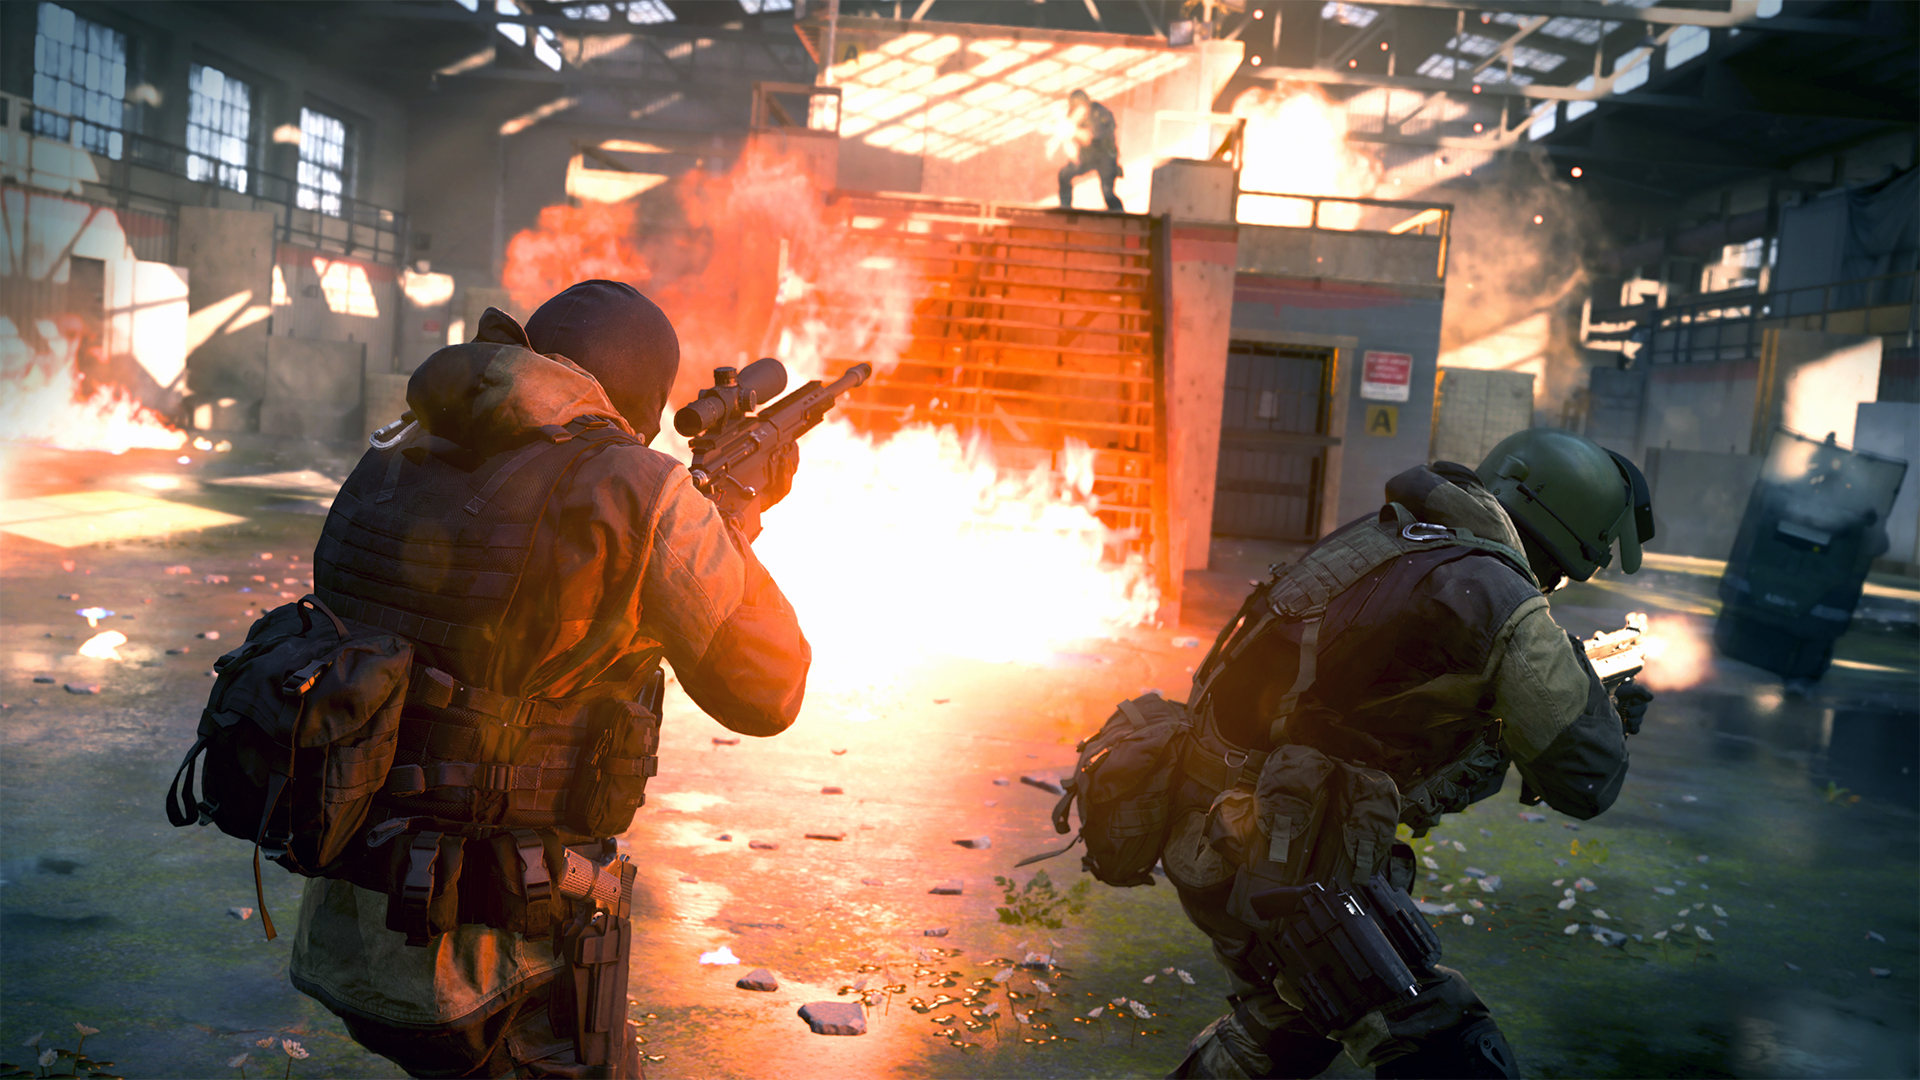 Call of Duty: Modern Warfare' Multiplayer Gunfight Mode Hits PS4 August 23